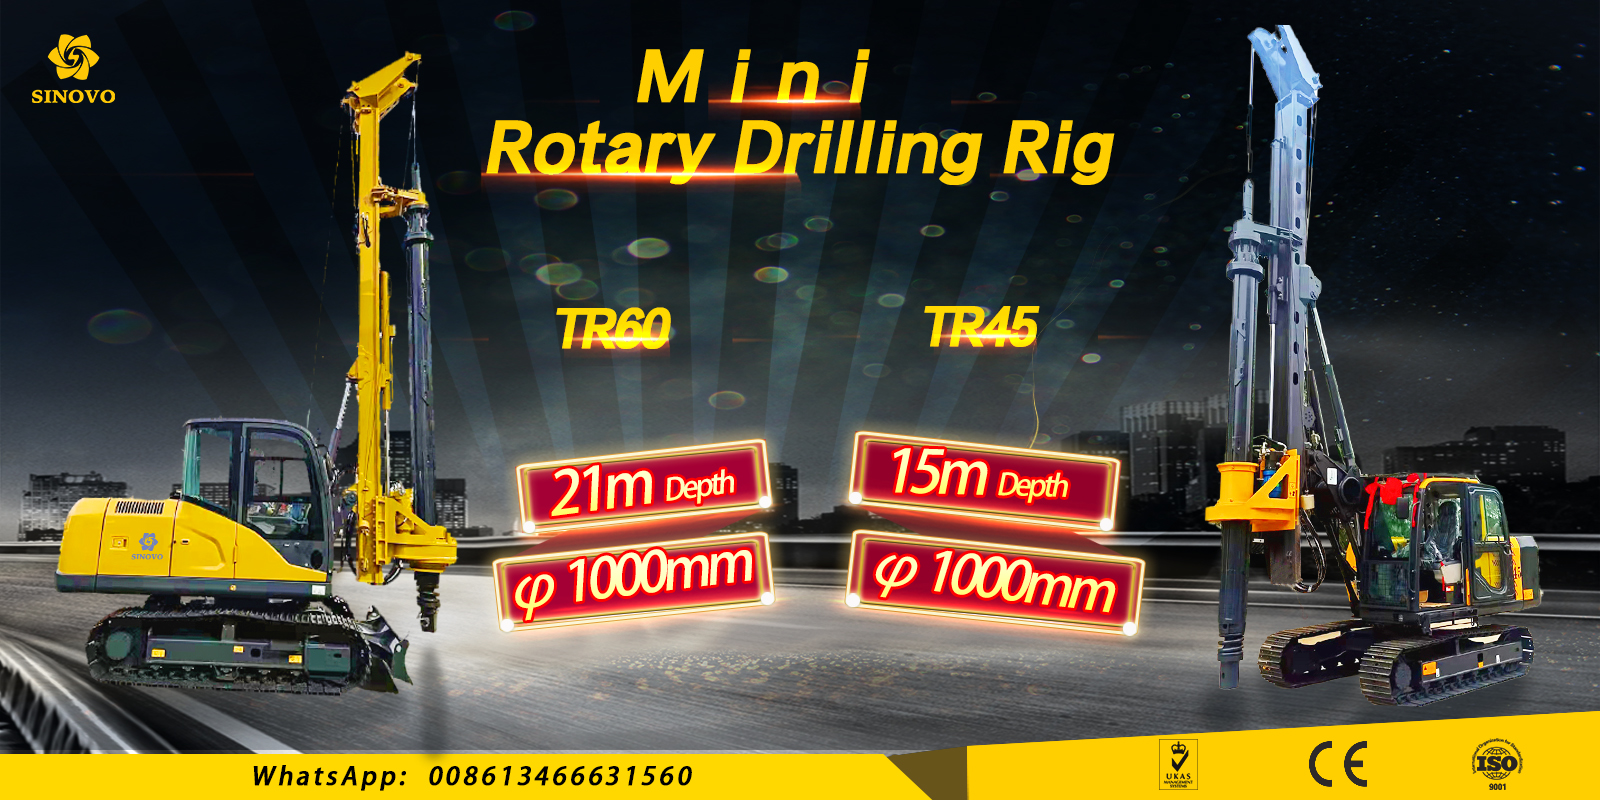 Mini rotary drilling rig